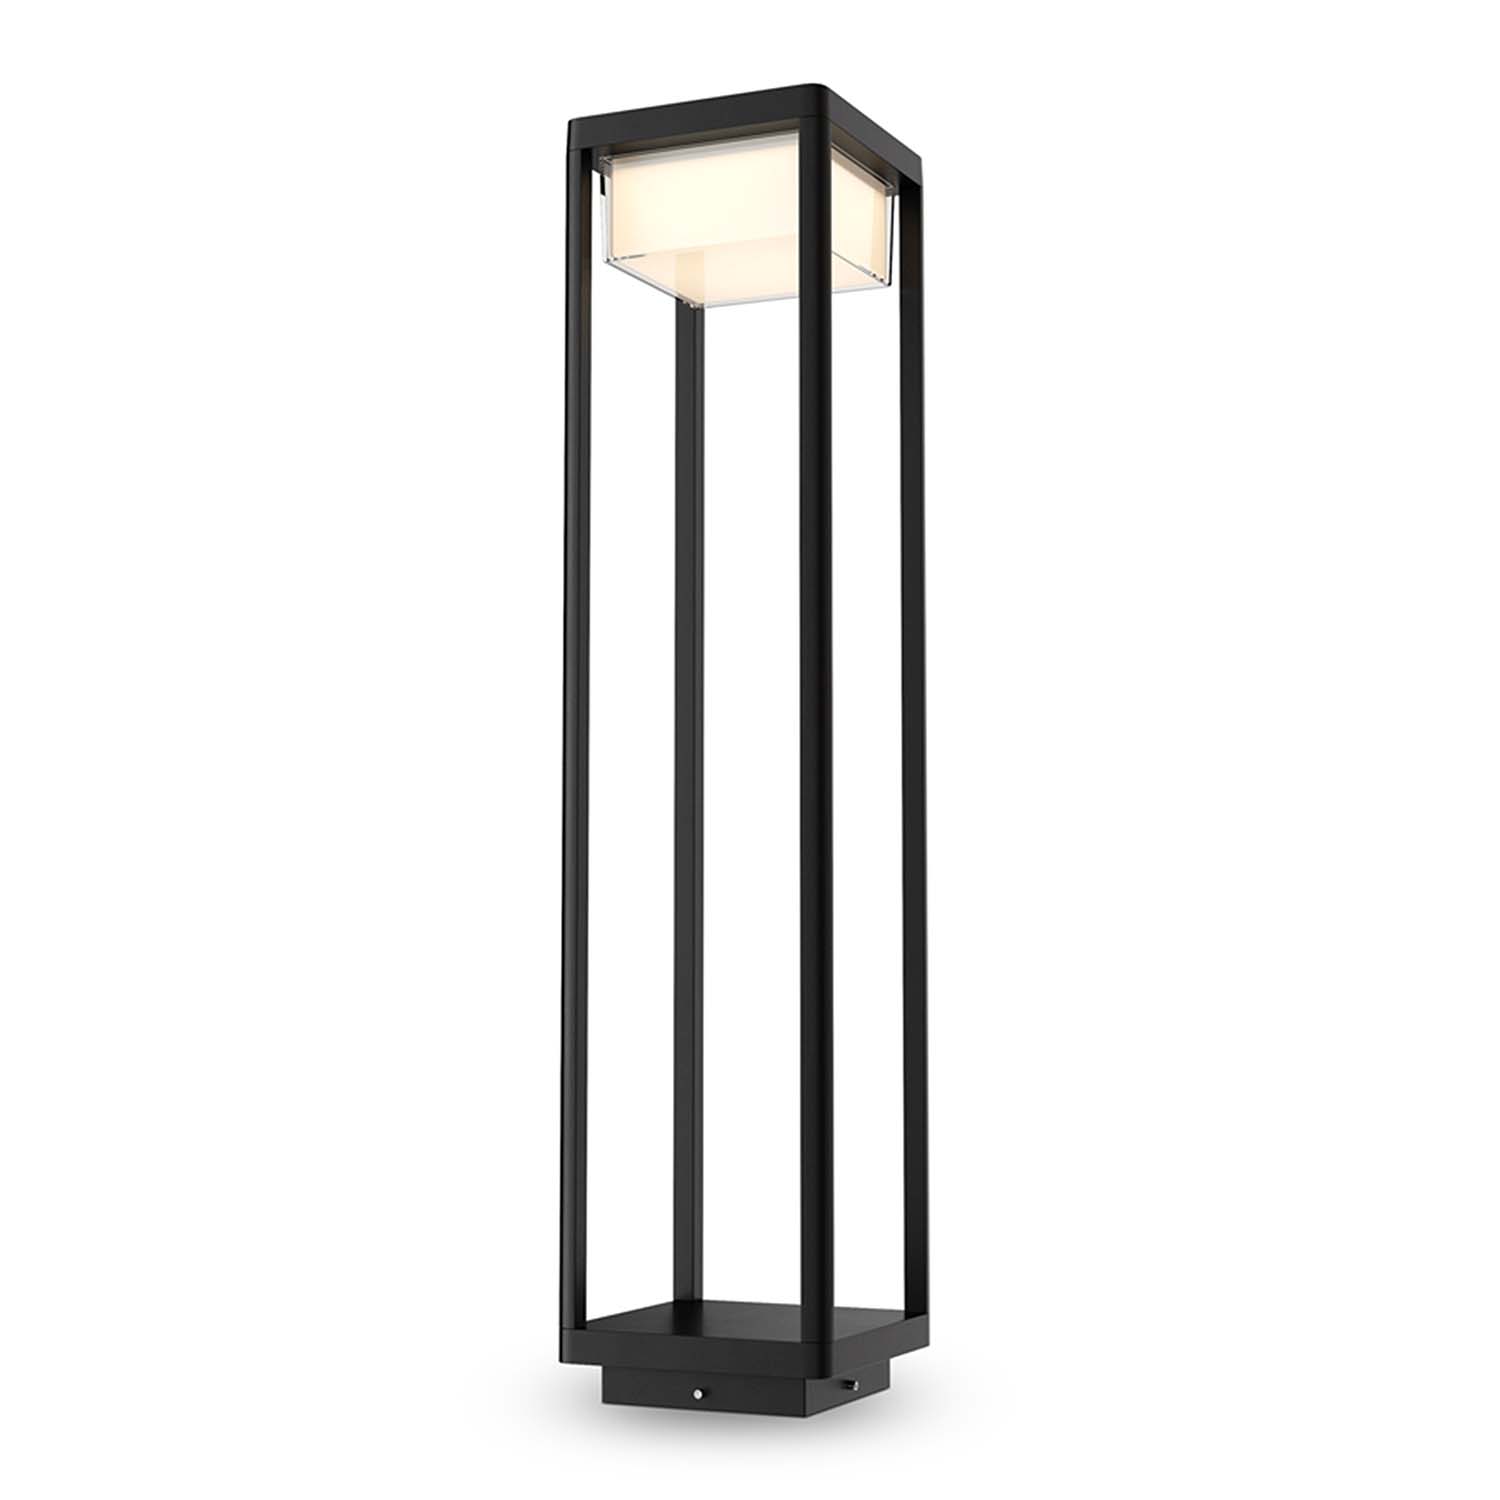 BAKER STREET F - Modern waterproof black outdoor lamp